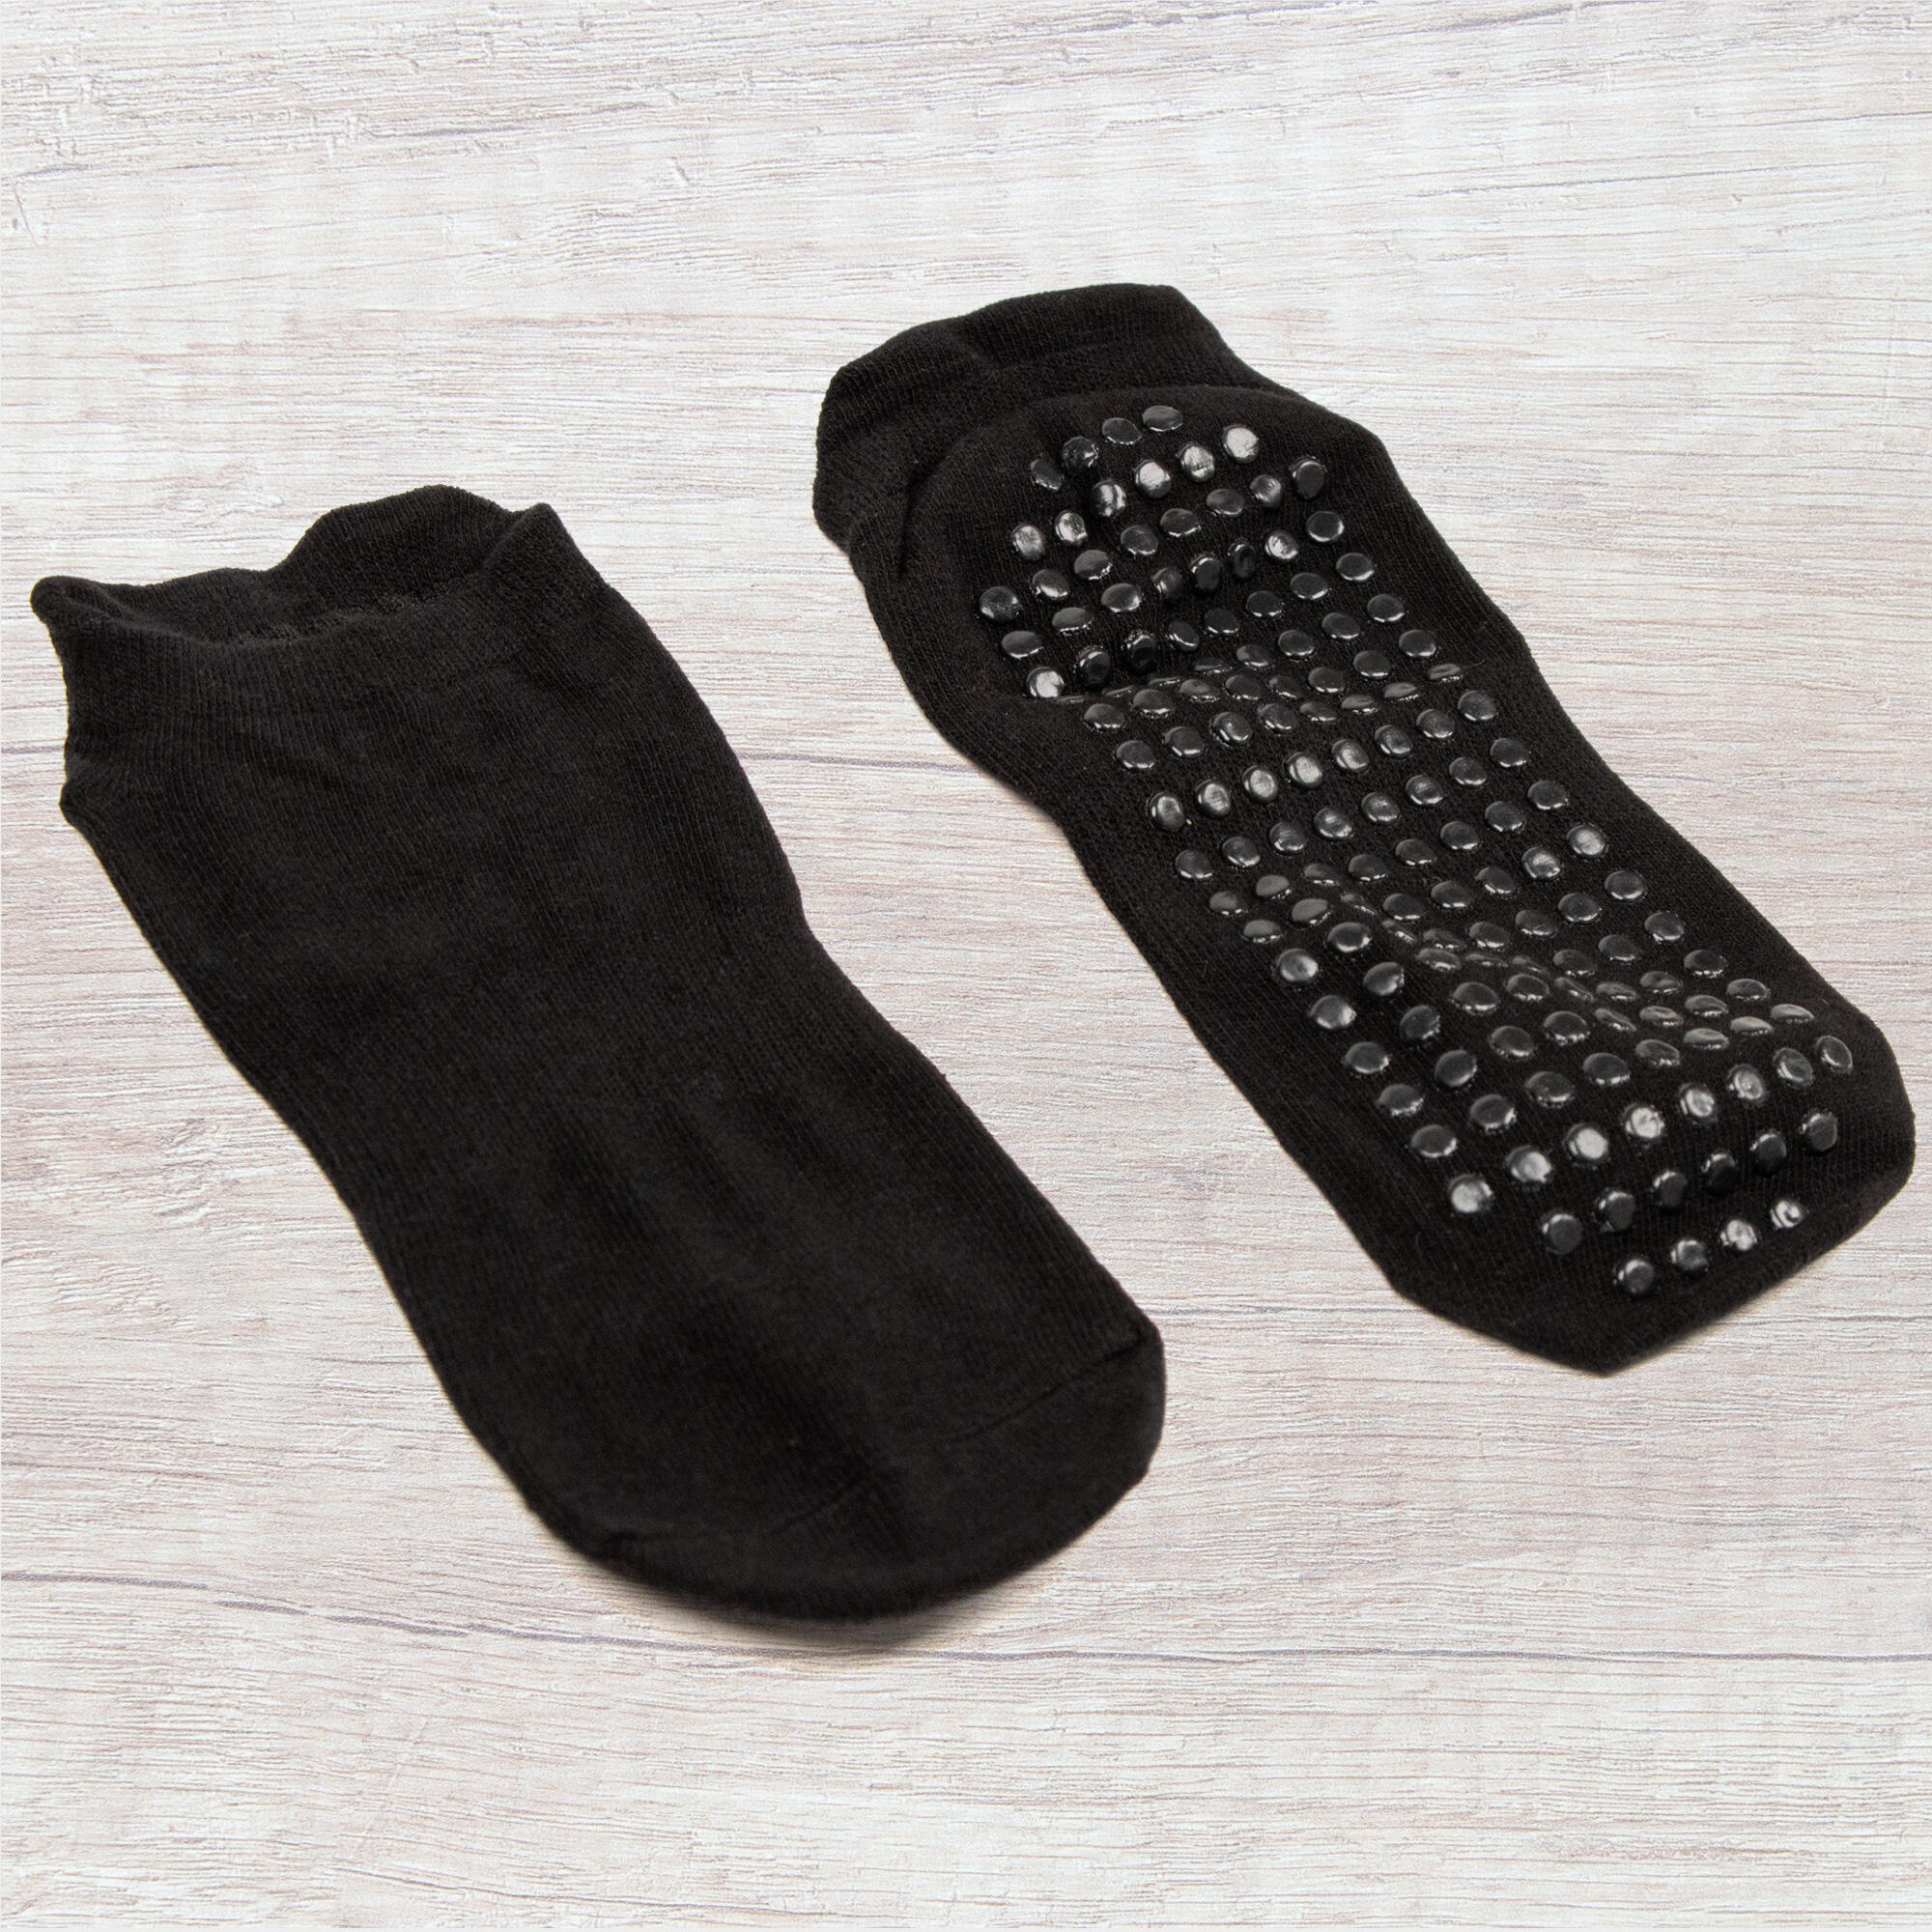 3 Pack of Yoga Socks - Large 6/6